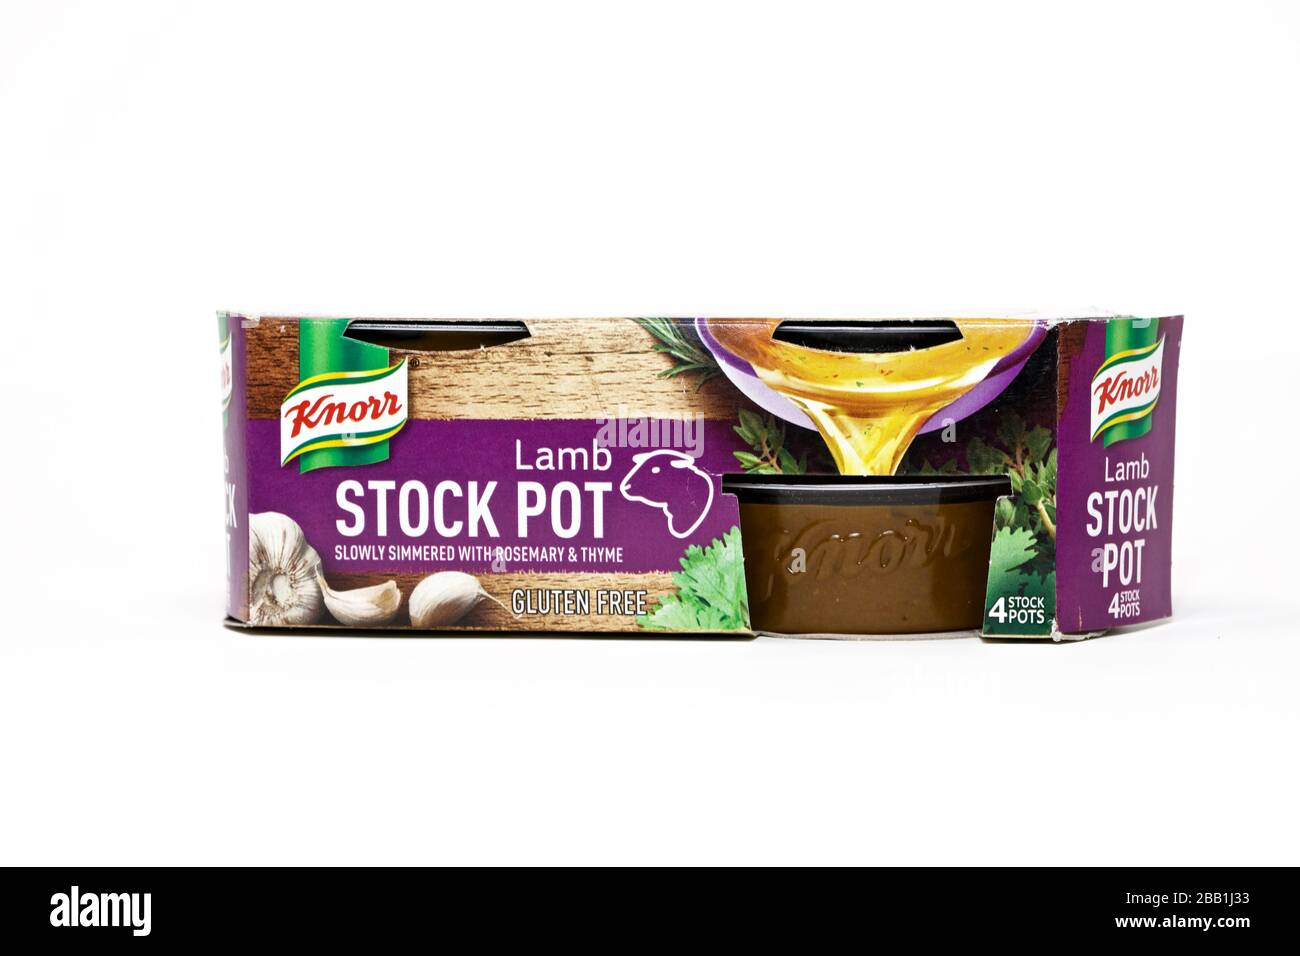 Knorr Stock Pot Stock Photo - Alamy